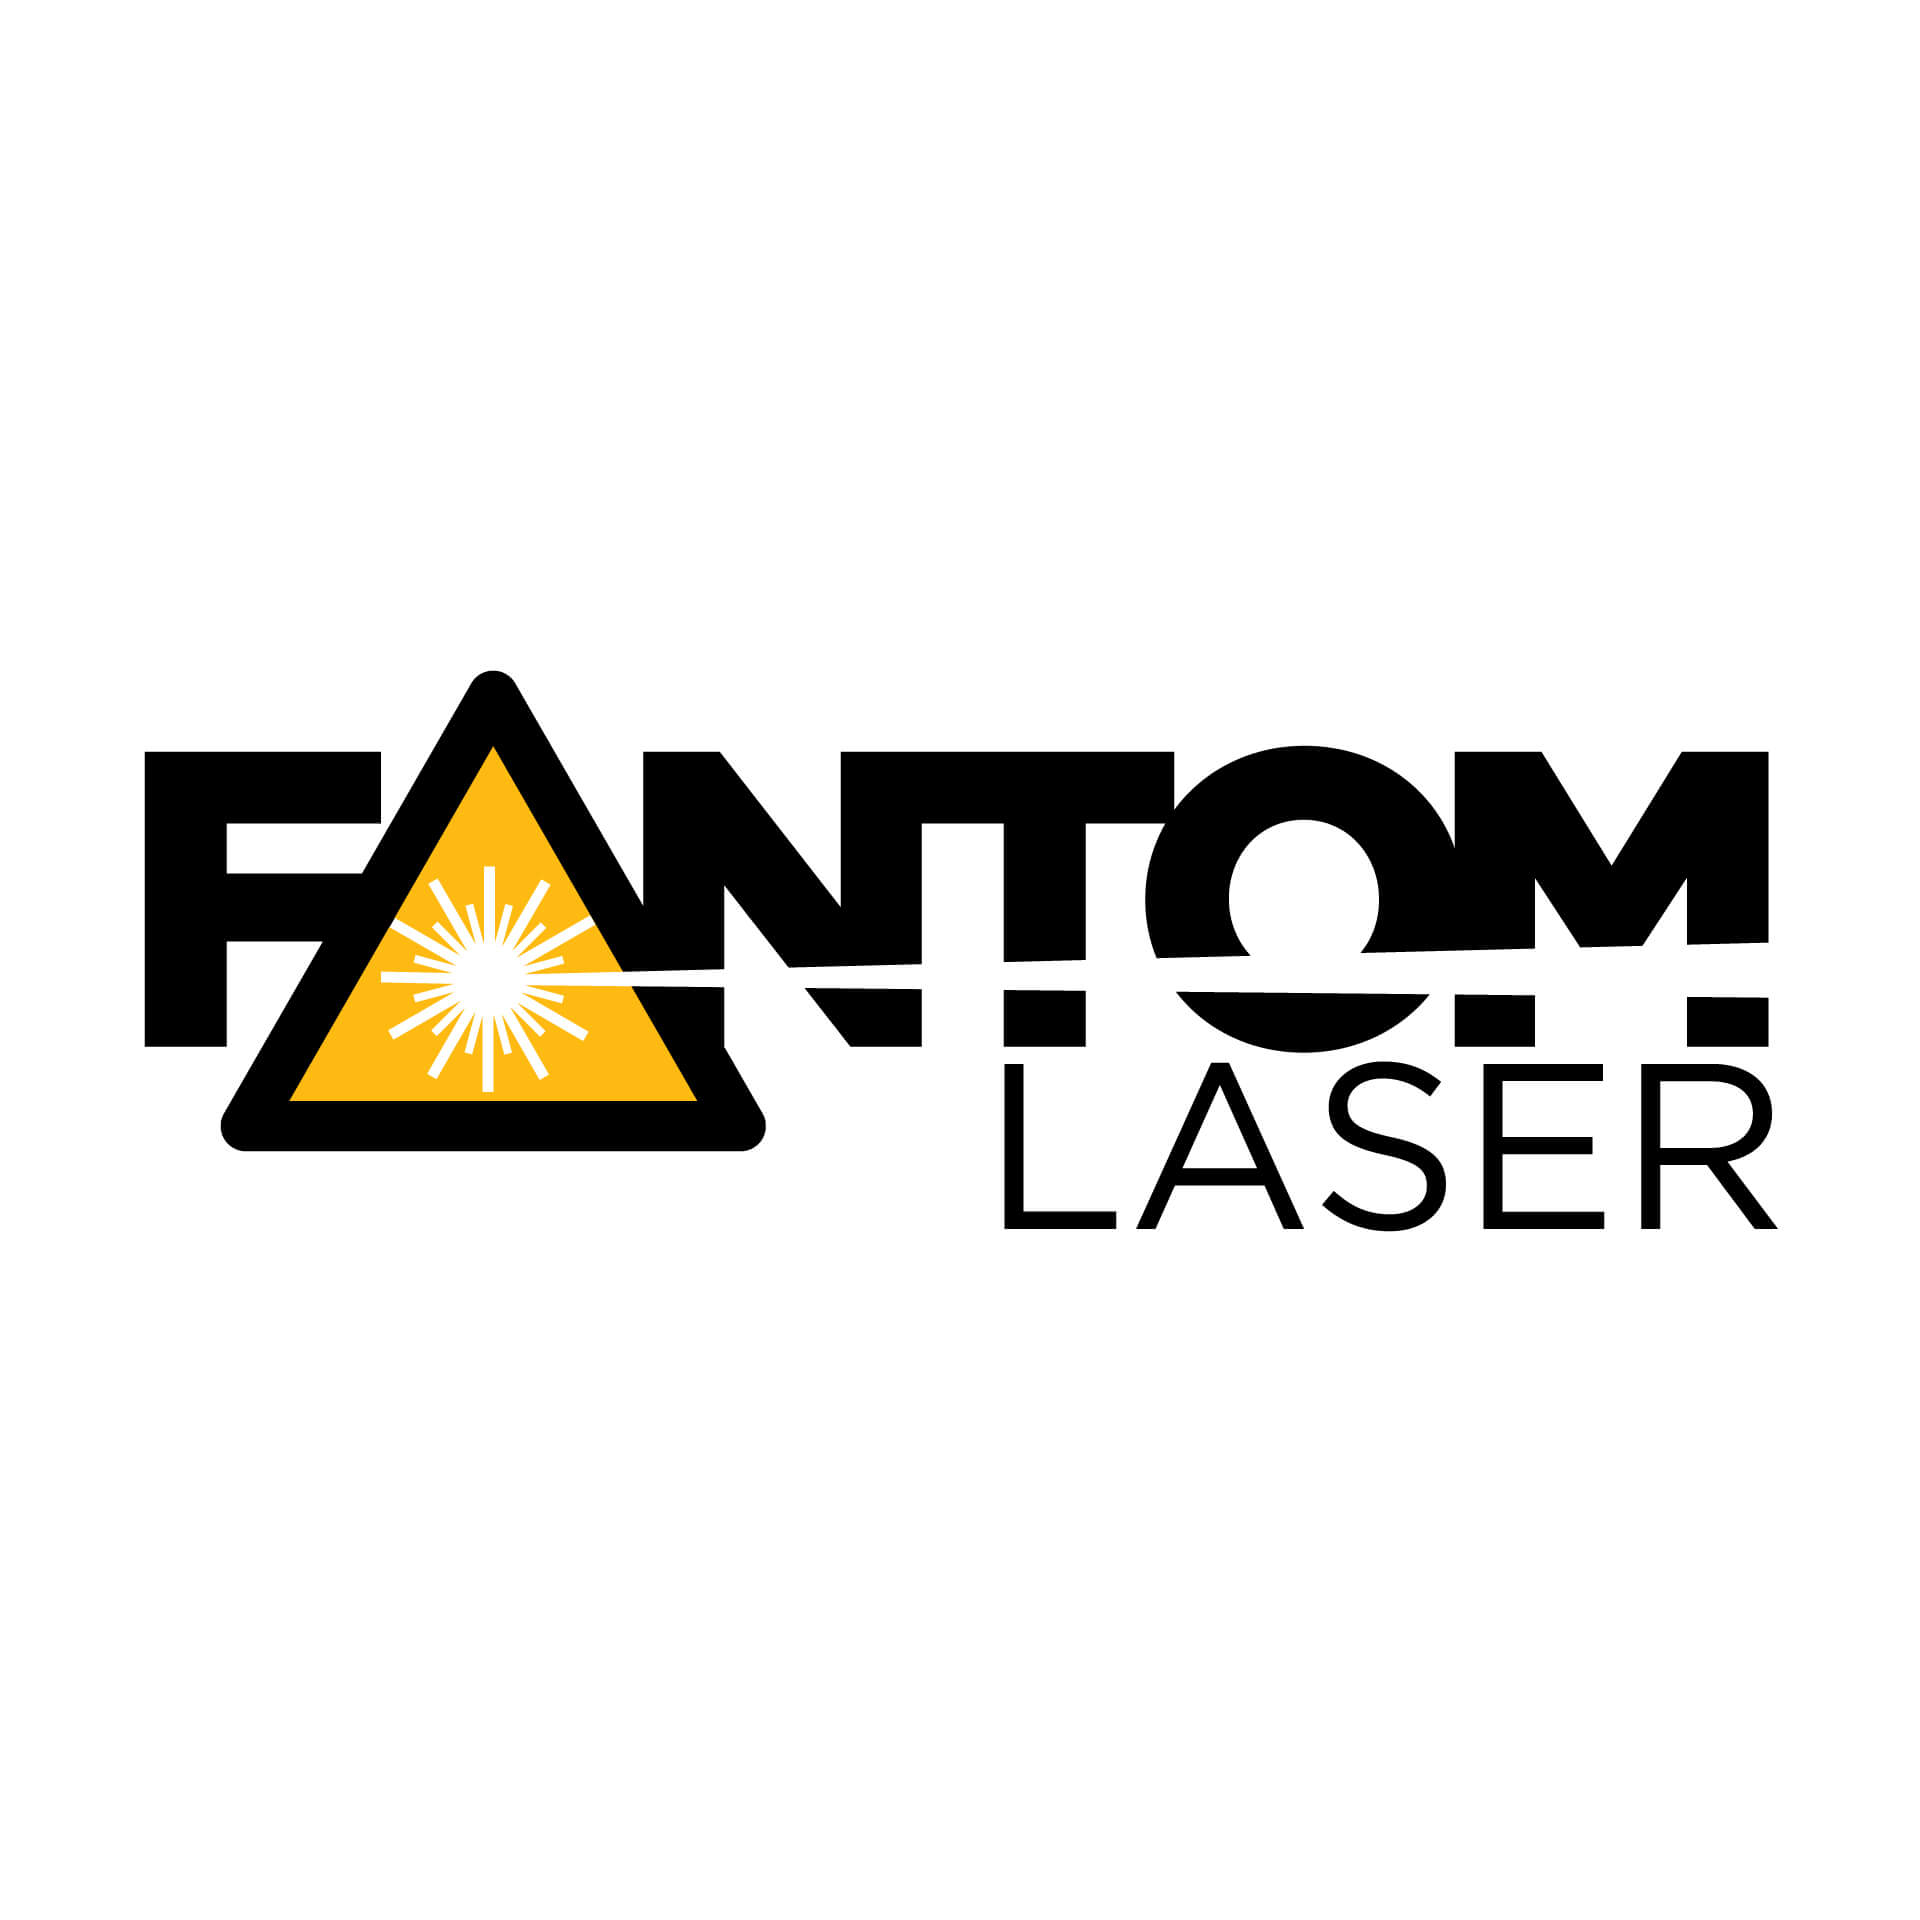 Fantom Laser Logo